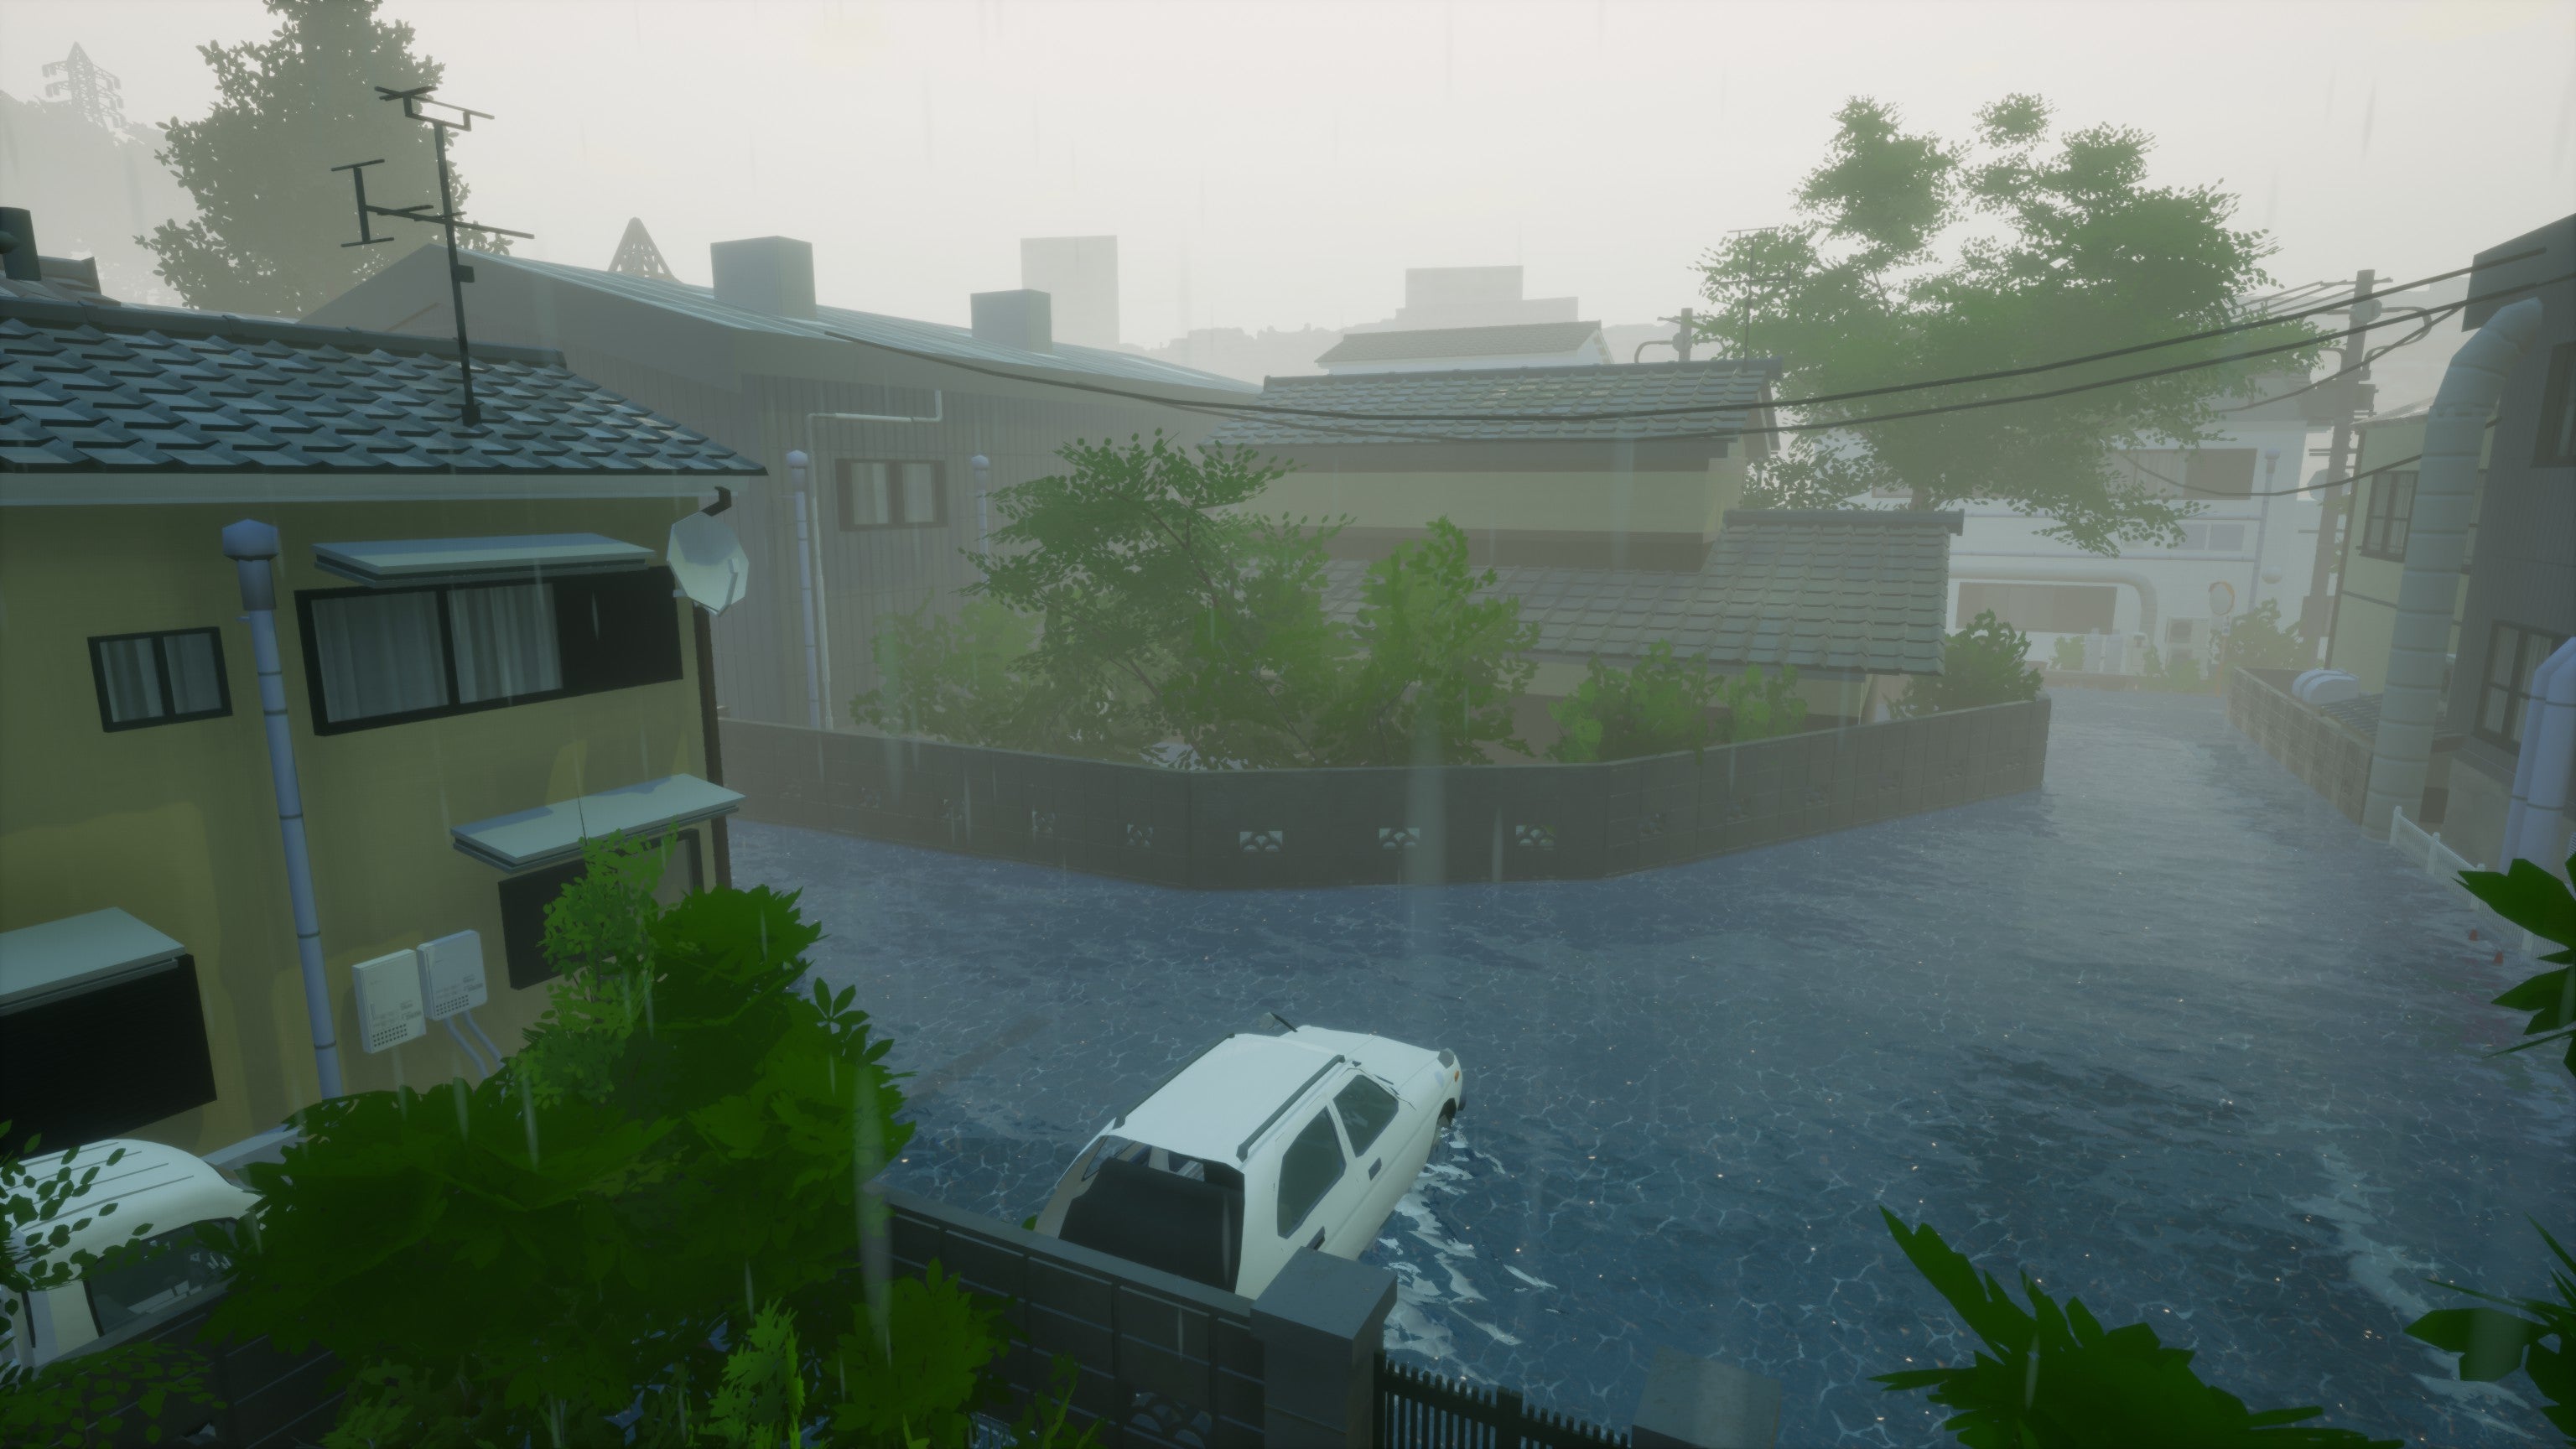 A flooded urban street in Rainy Season